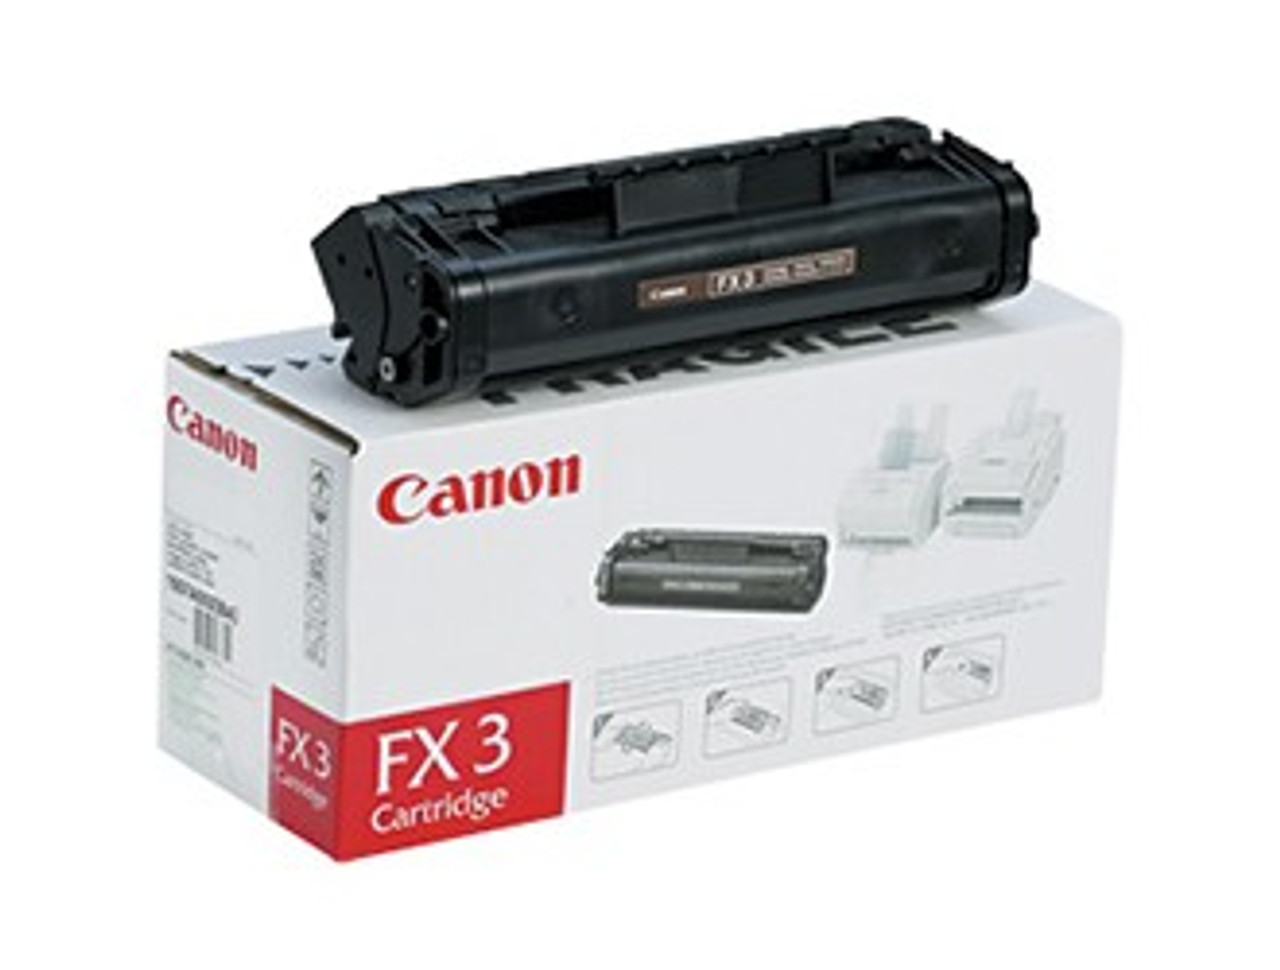 1557A002 | Canon FX-3 | Original Canon Toner Cartridge - Black